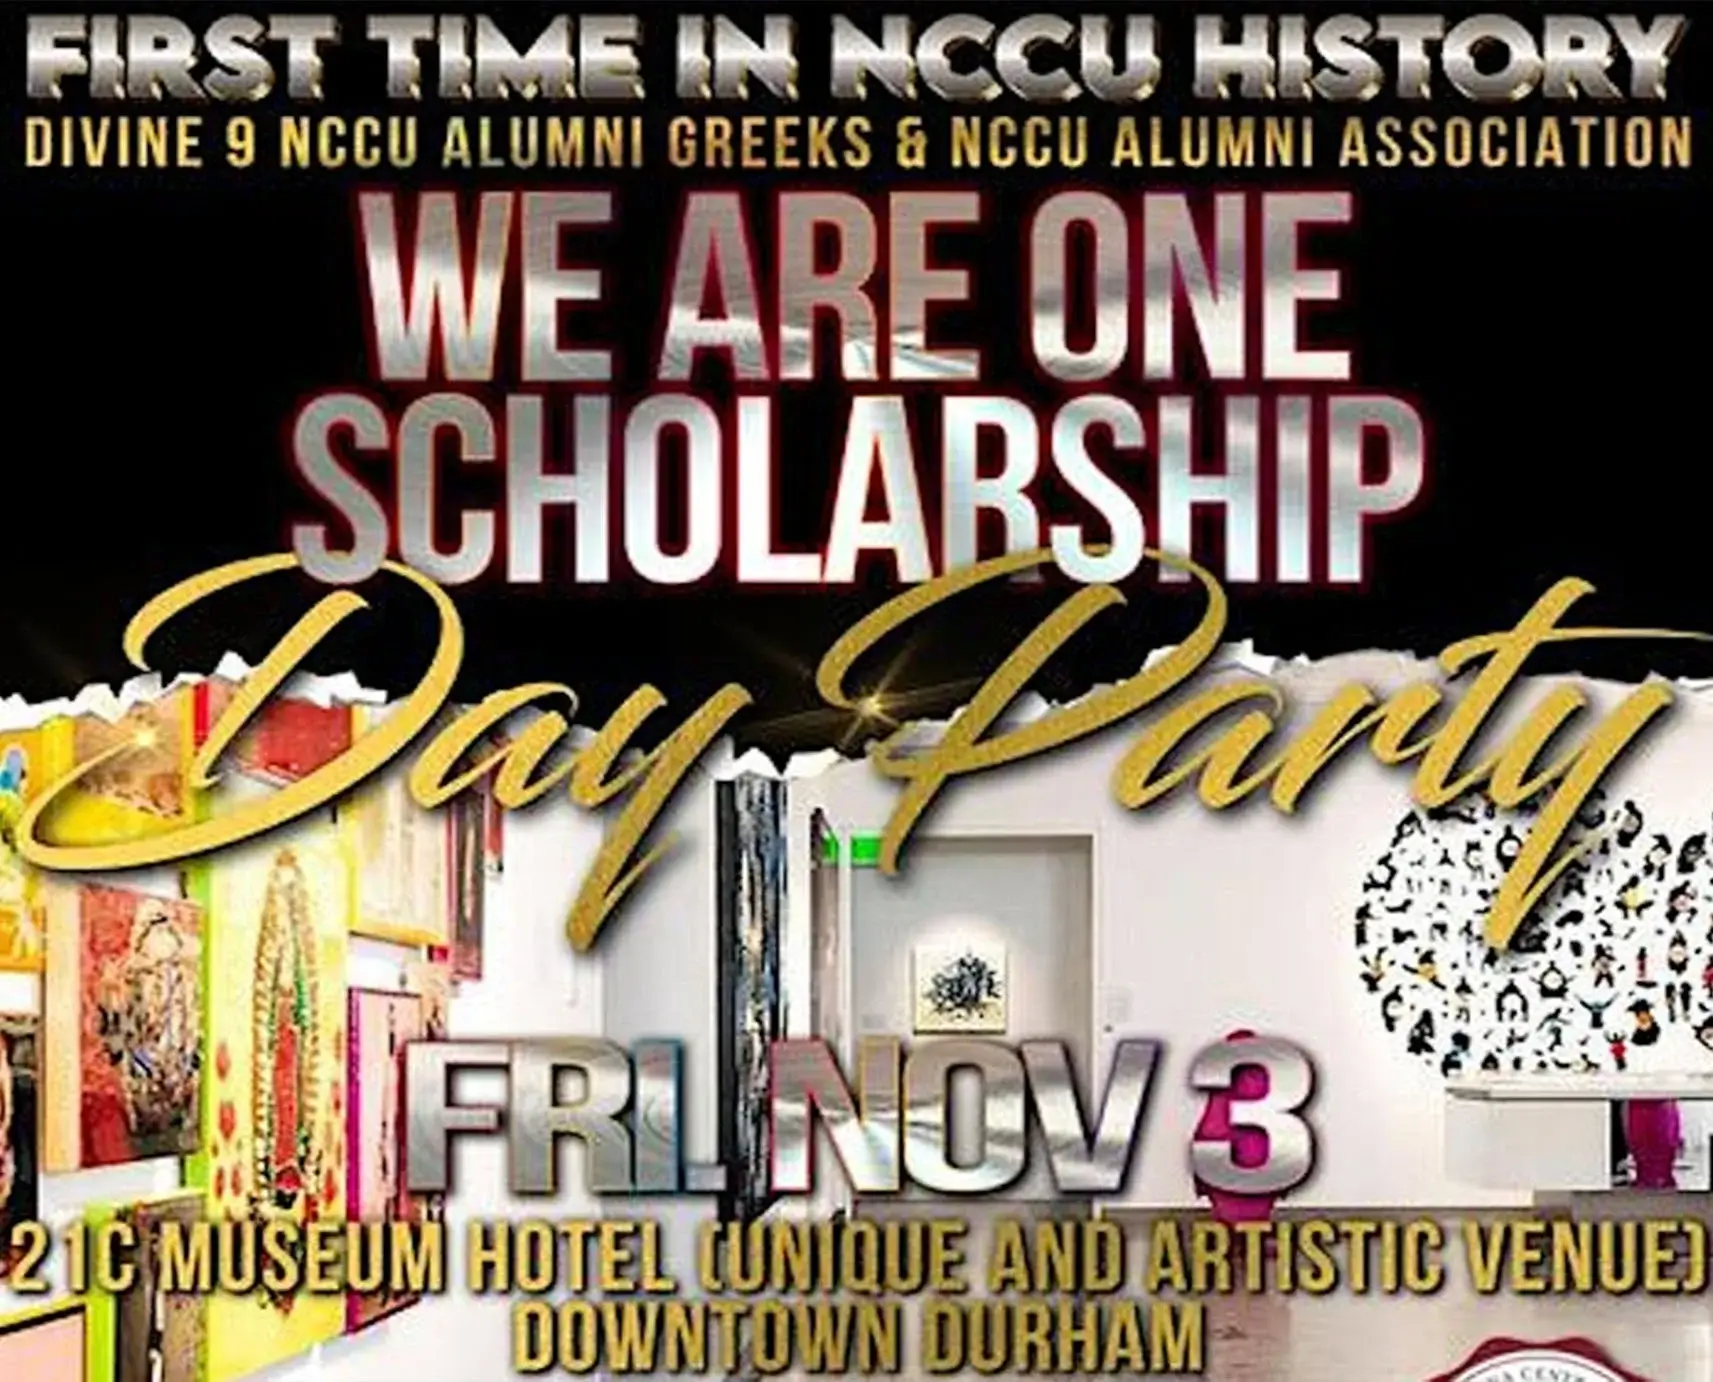 NCCU Divine 9 & NCCU Alumni "We Are One" Scholarship Day Party